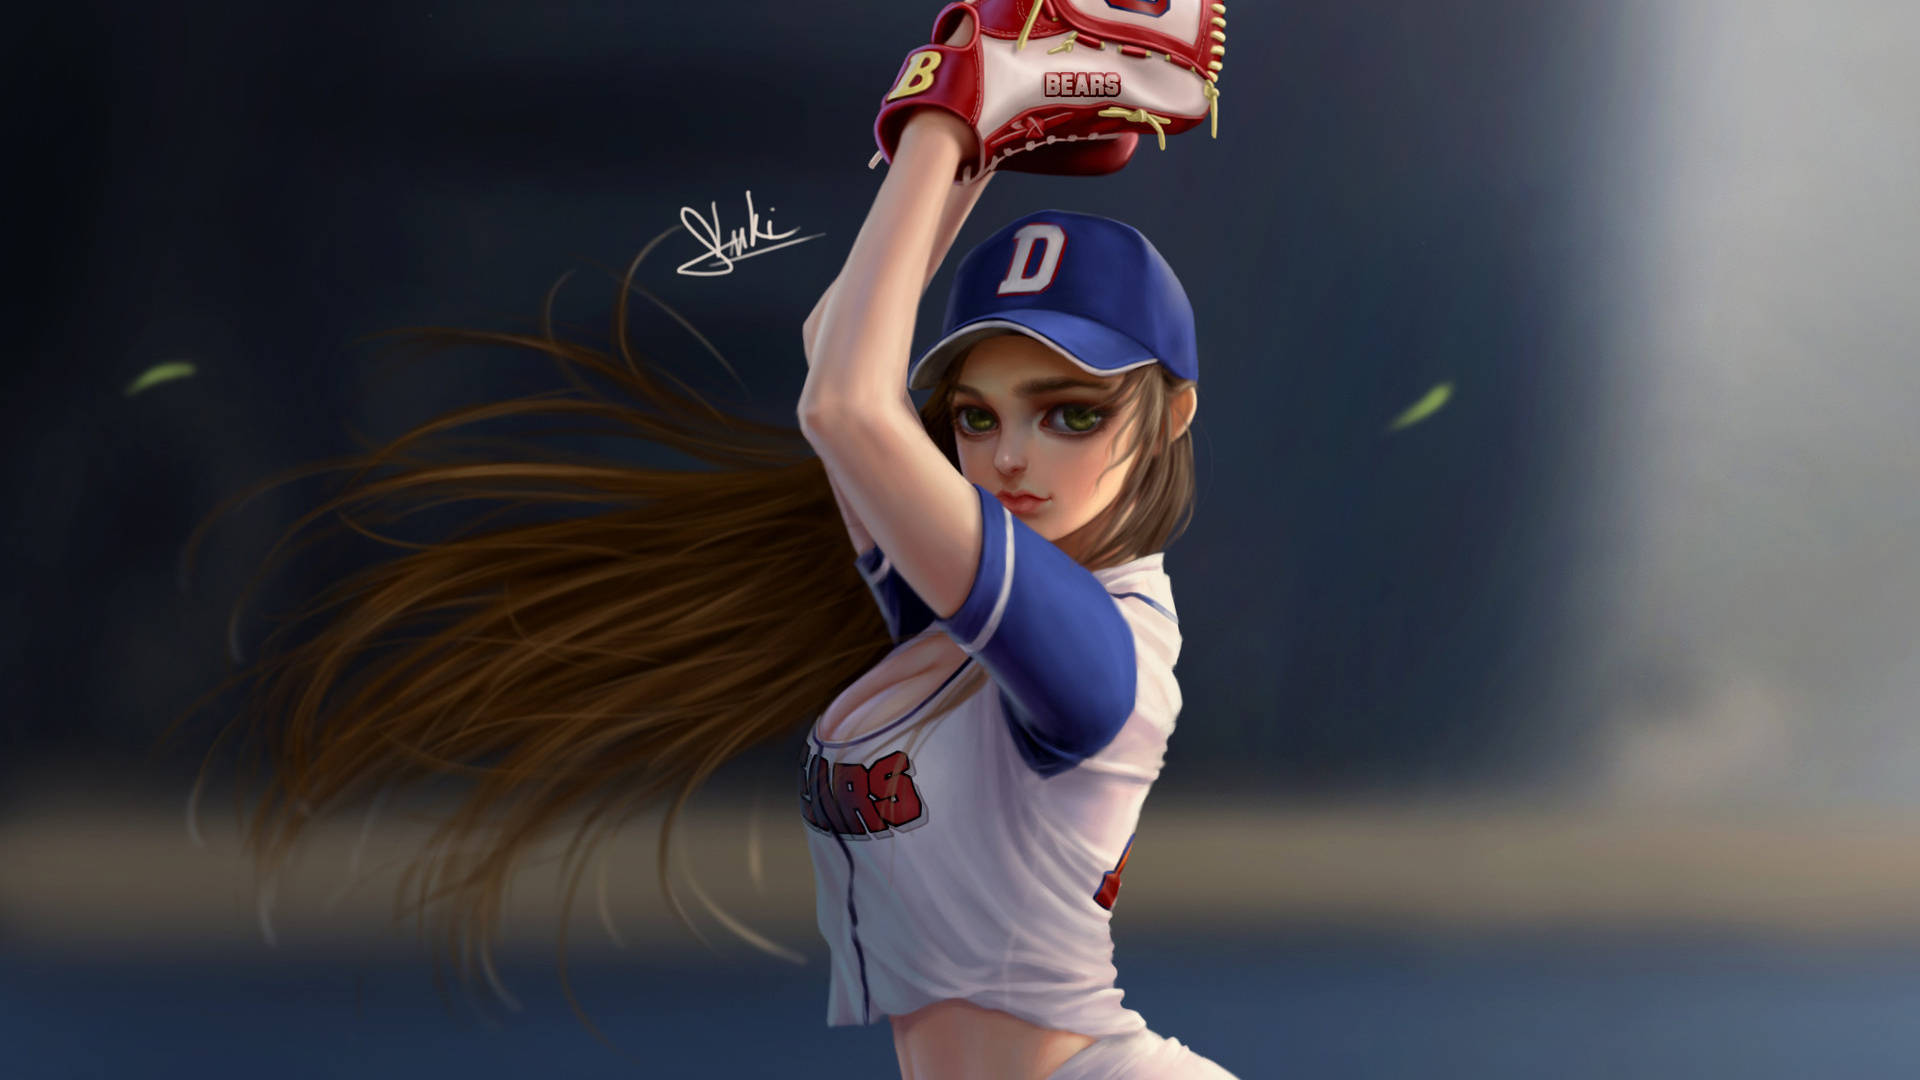 Download Cute Softball Anime Player Wallpaper